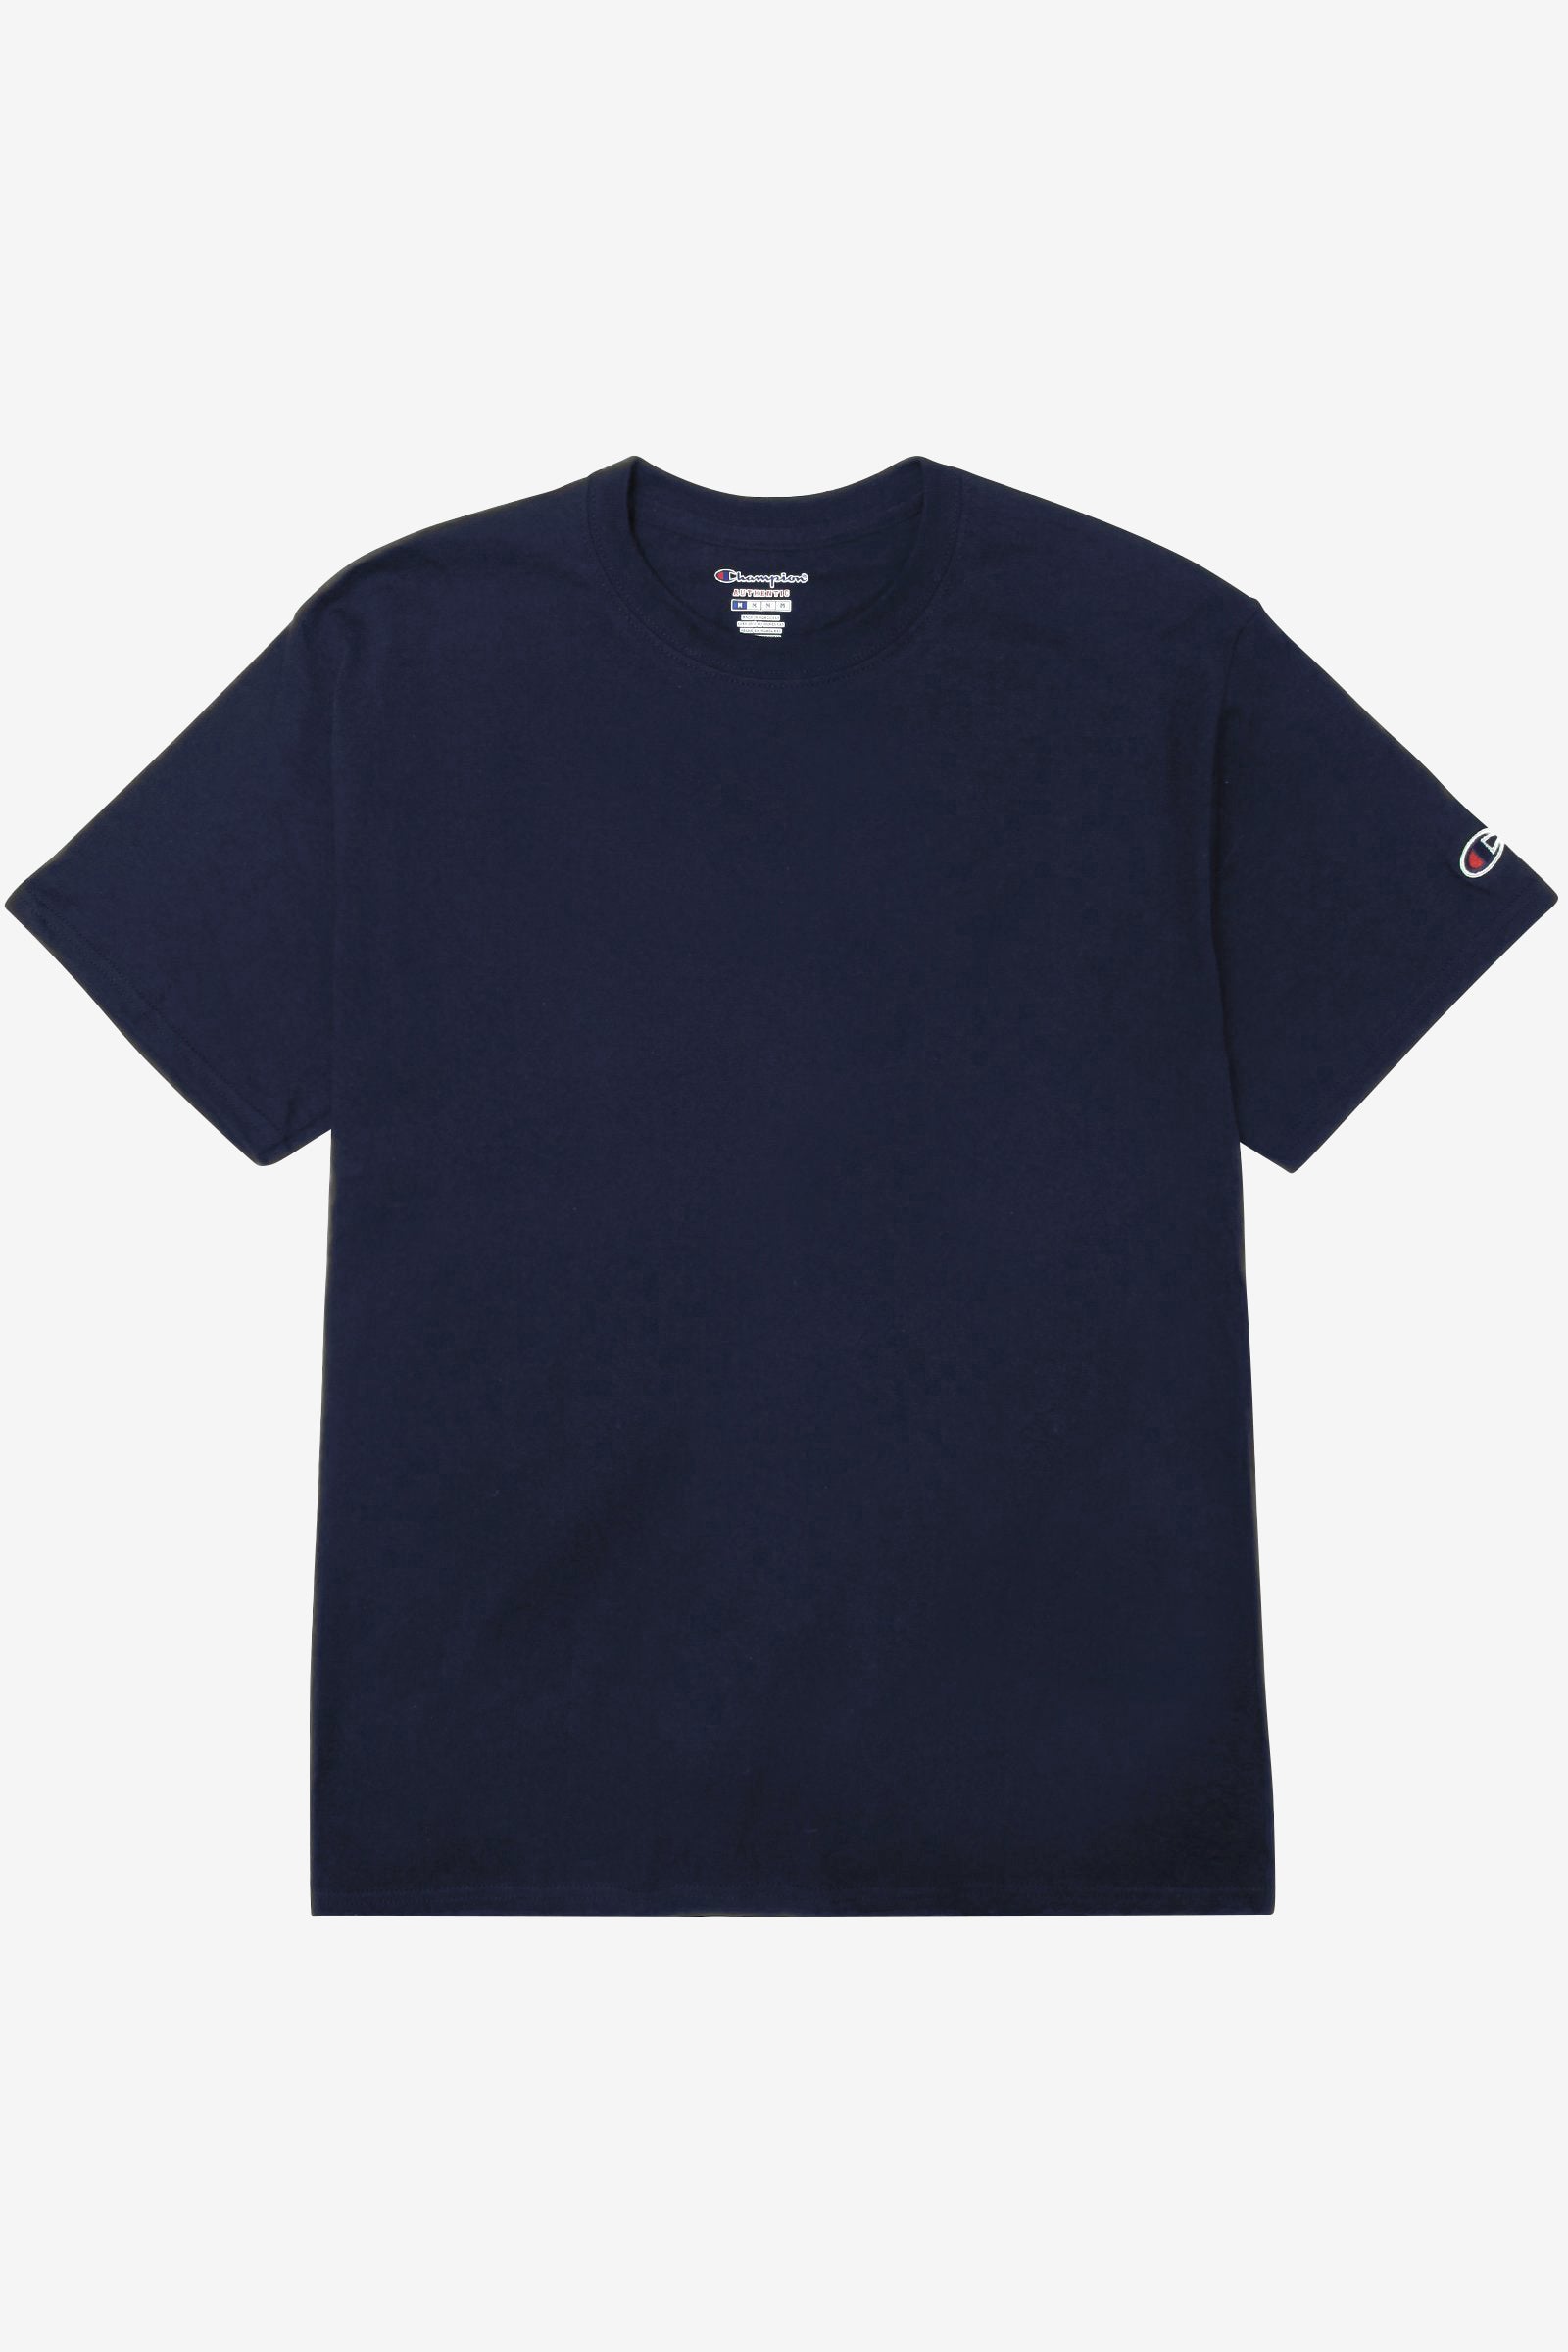 Champion - 6oz Classic T-Shirt - Navy